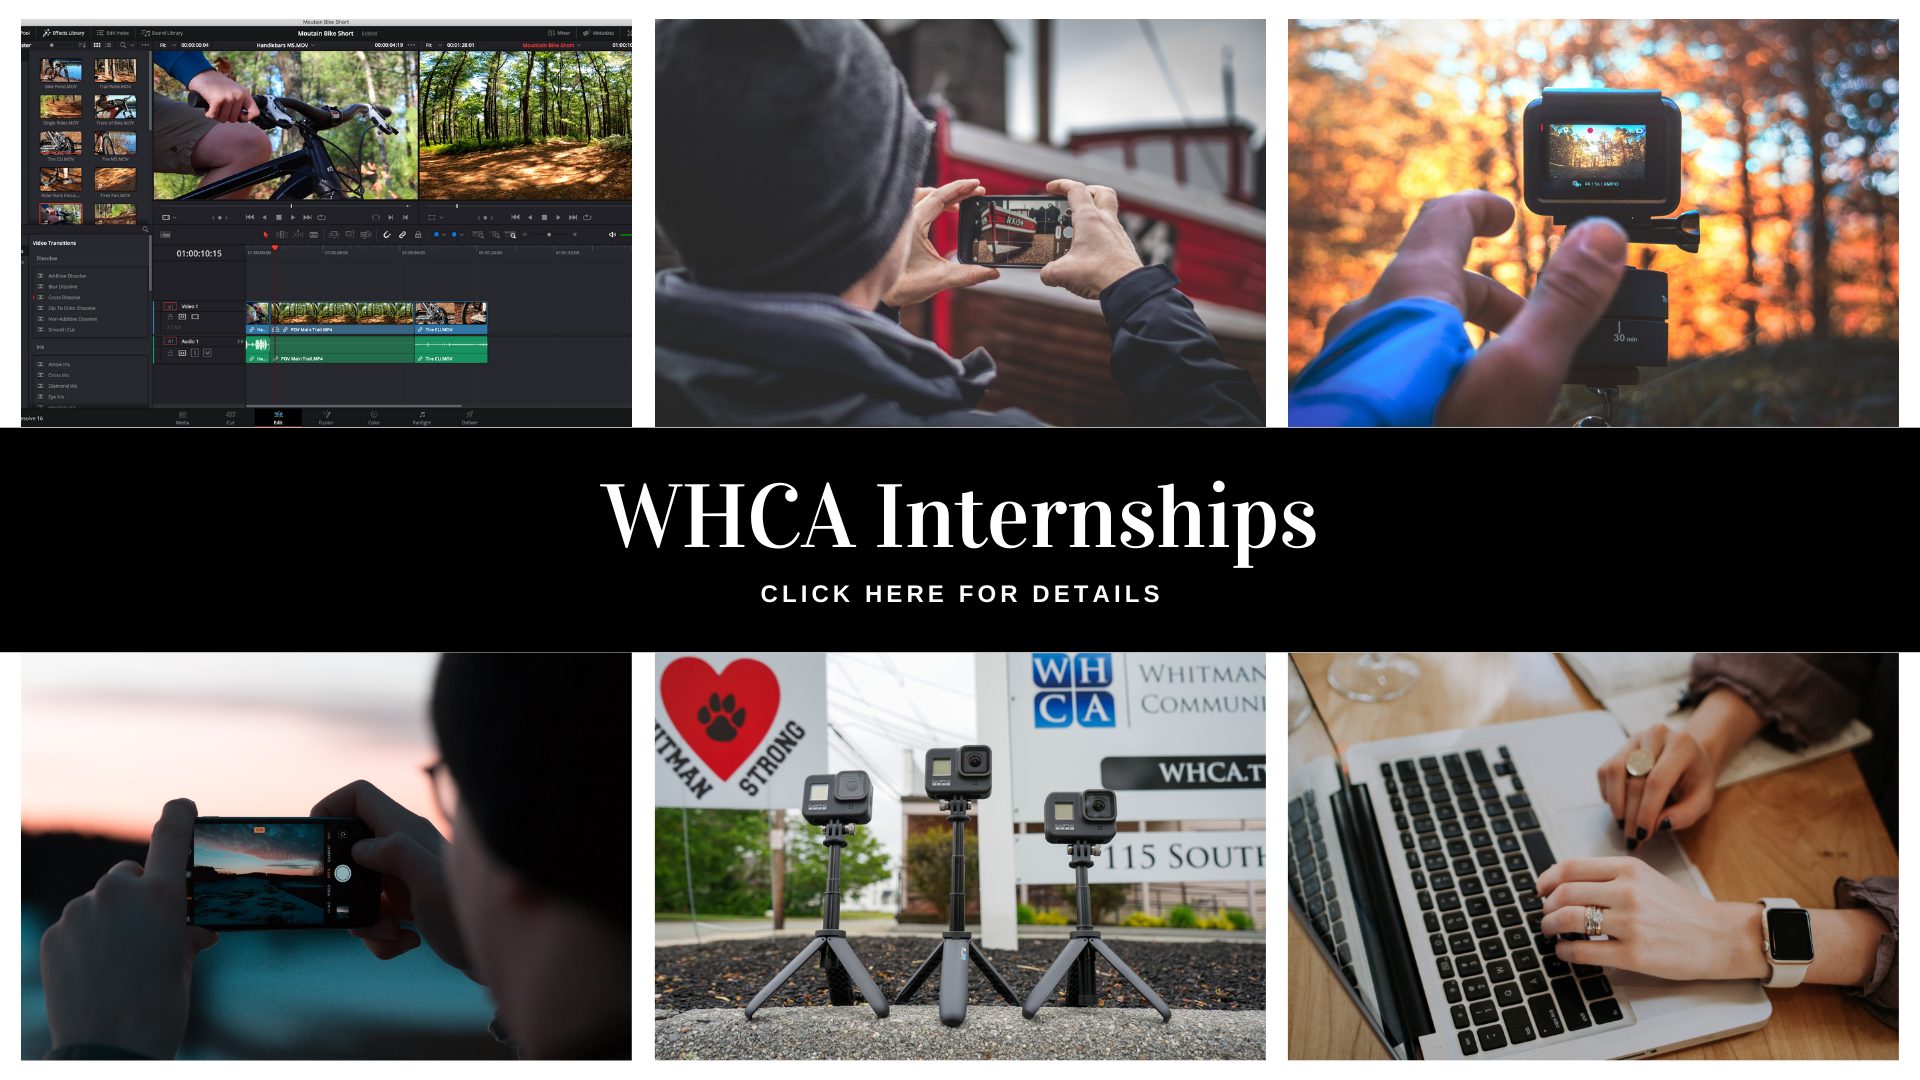 WHCA Internships